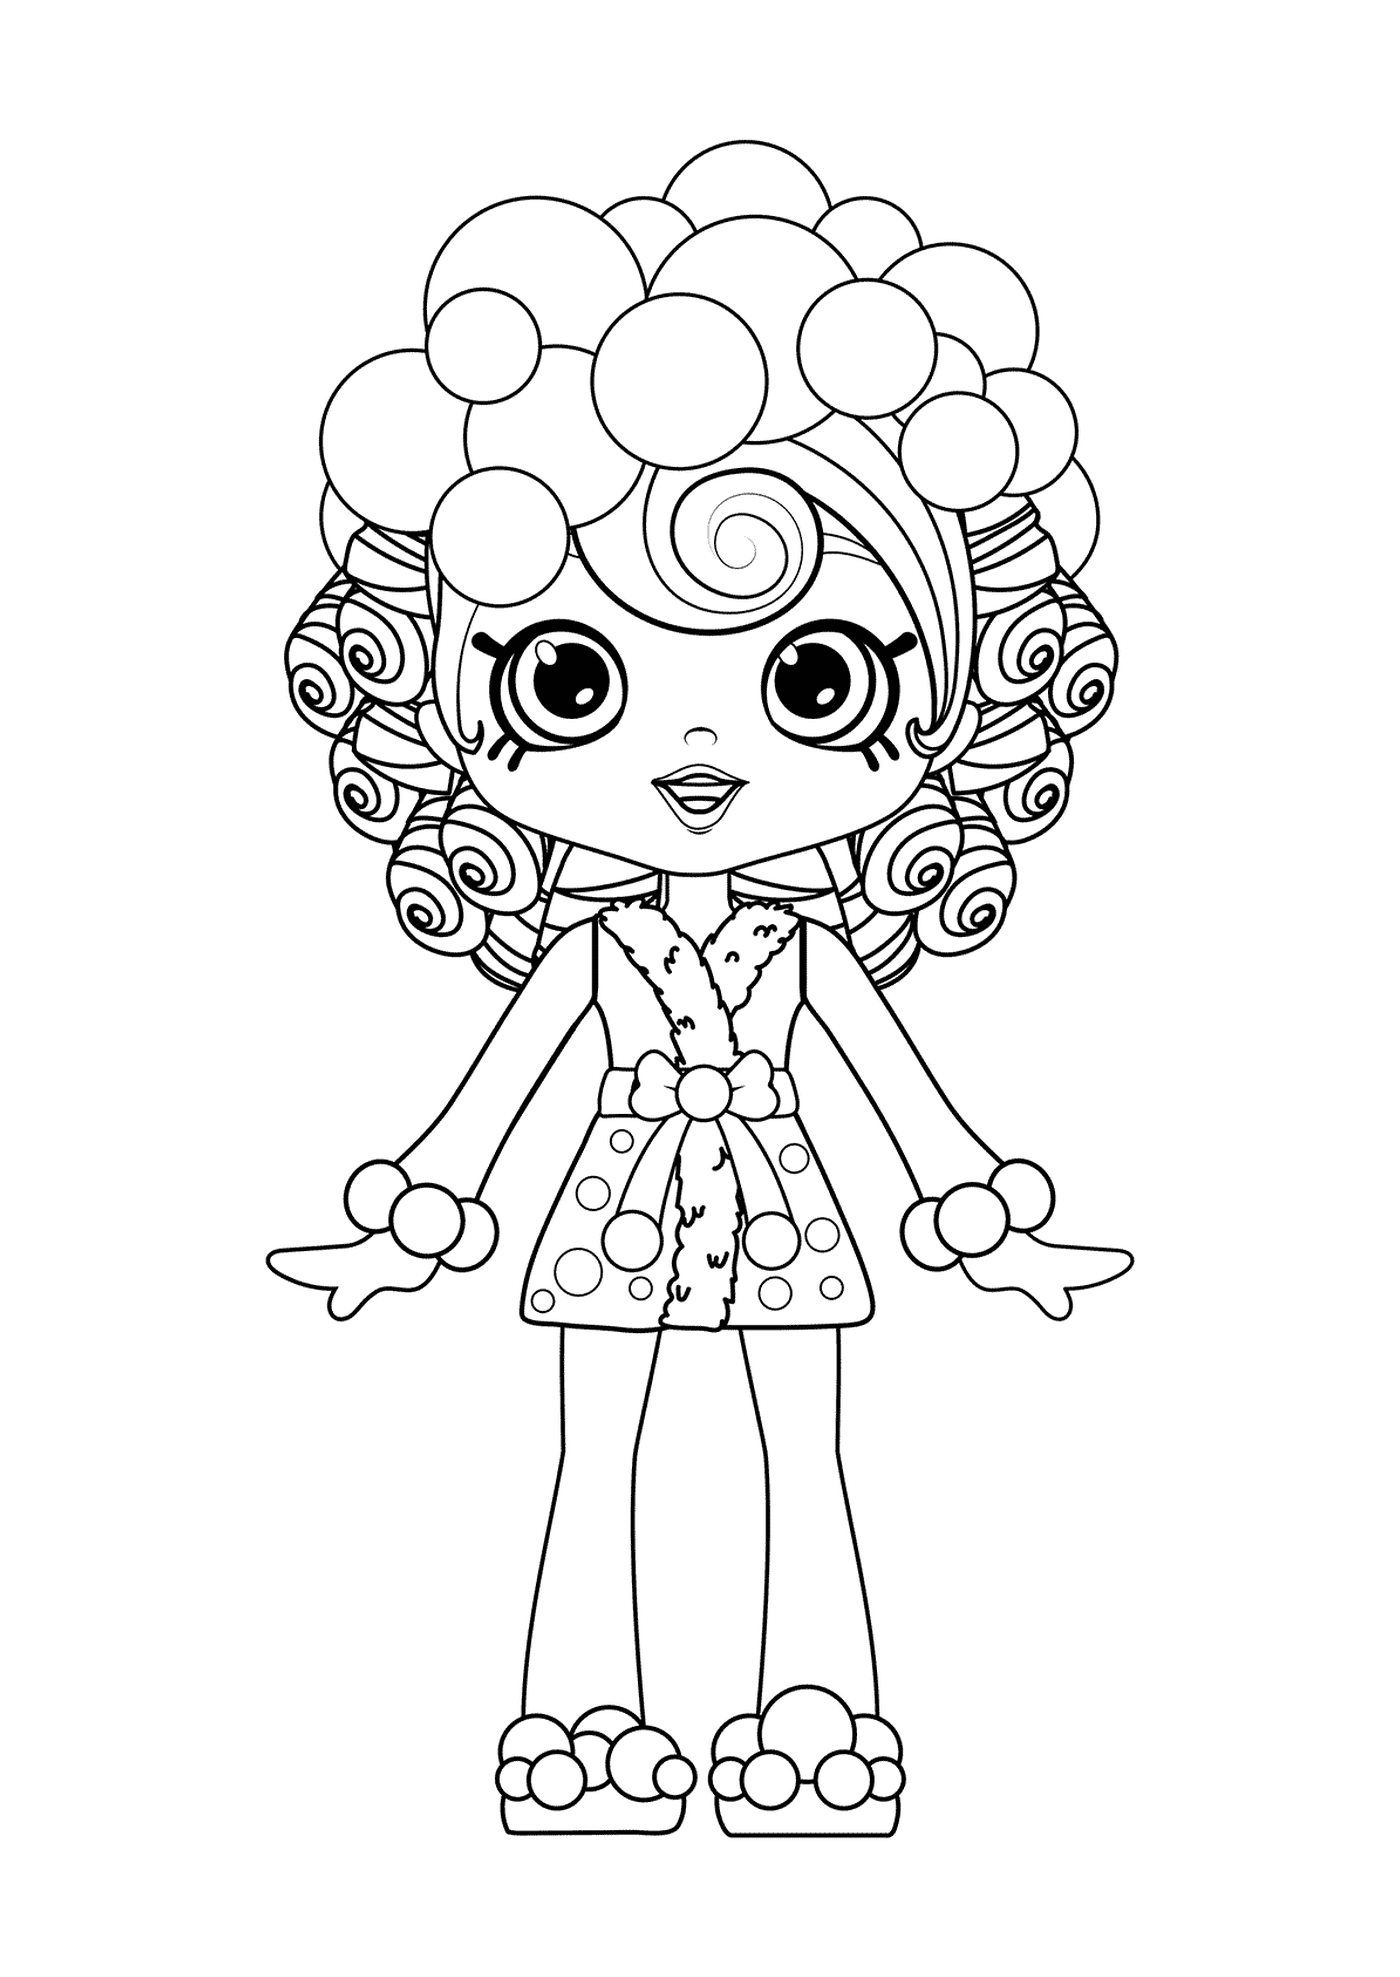  A Bubbleisha doll 